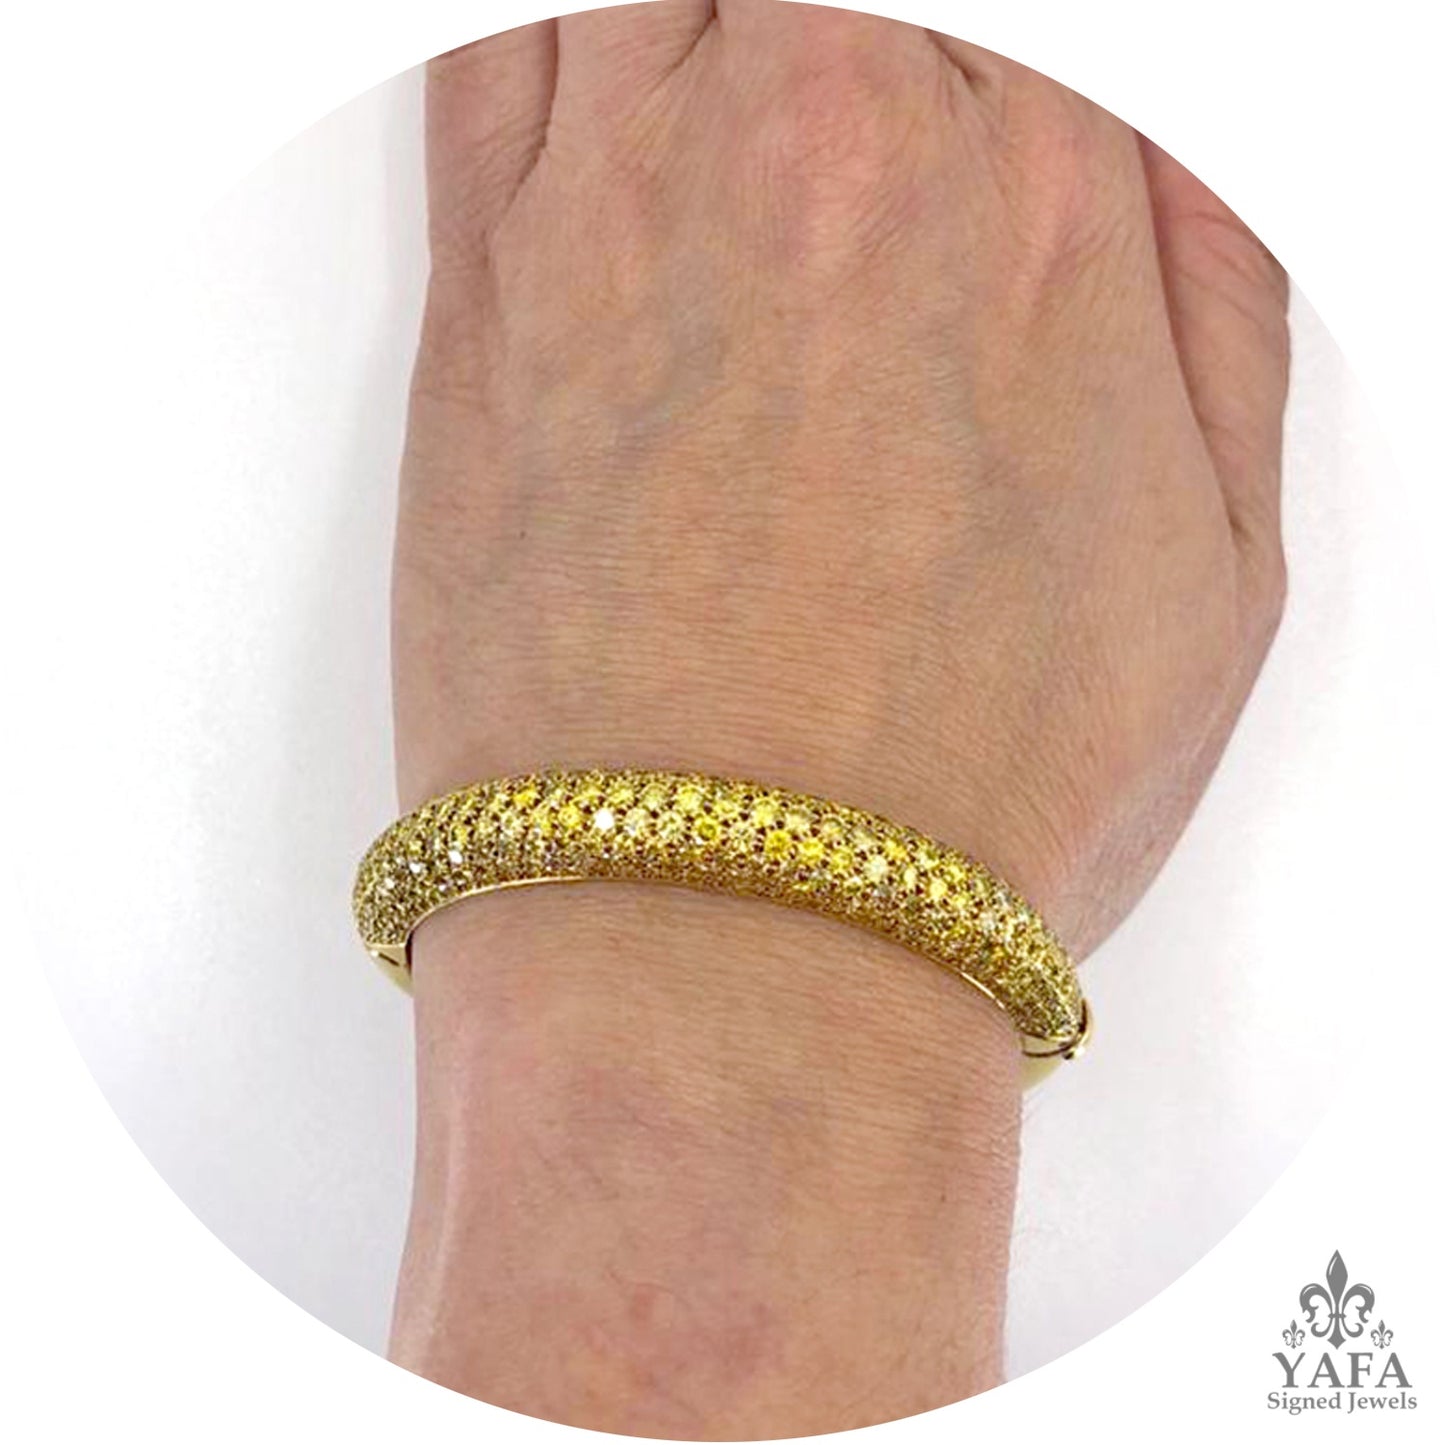 VAN CLEEF & ARPELS Yellow Diamond Bangle Bracelet